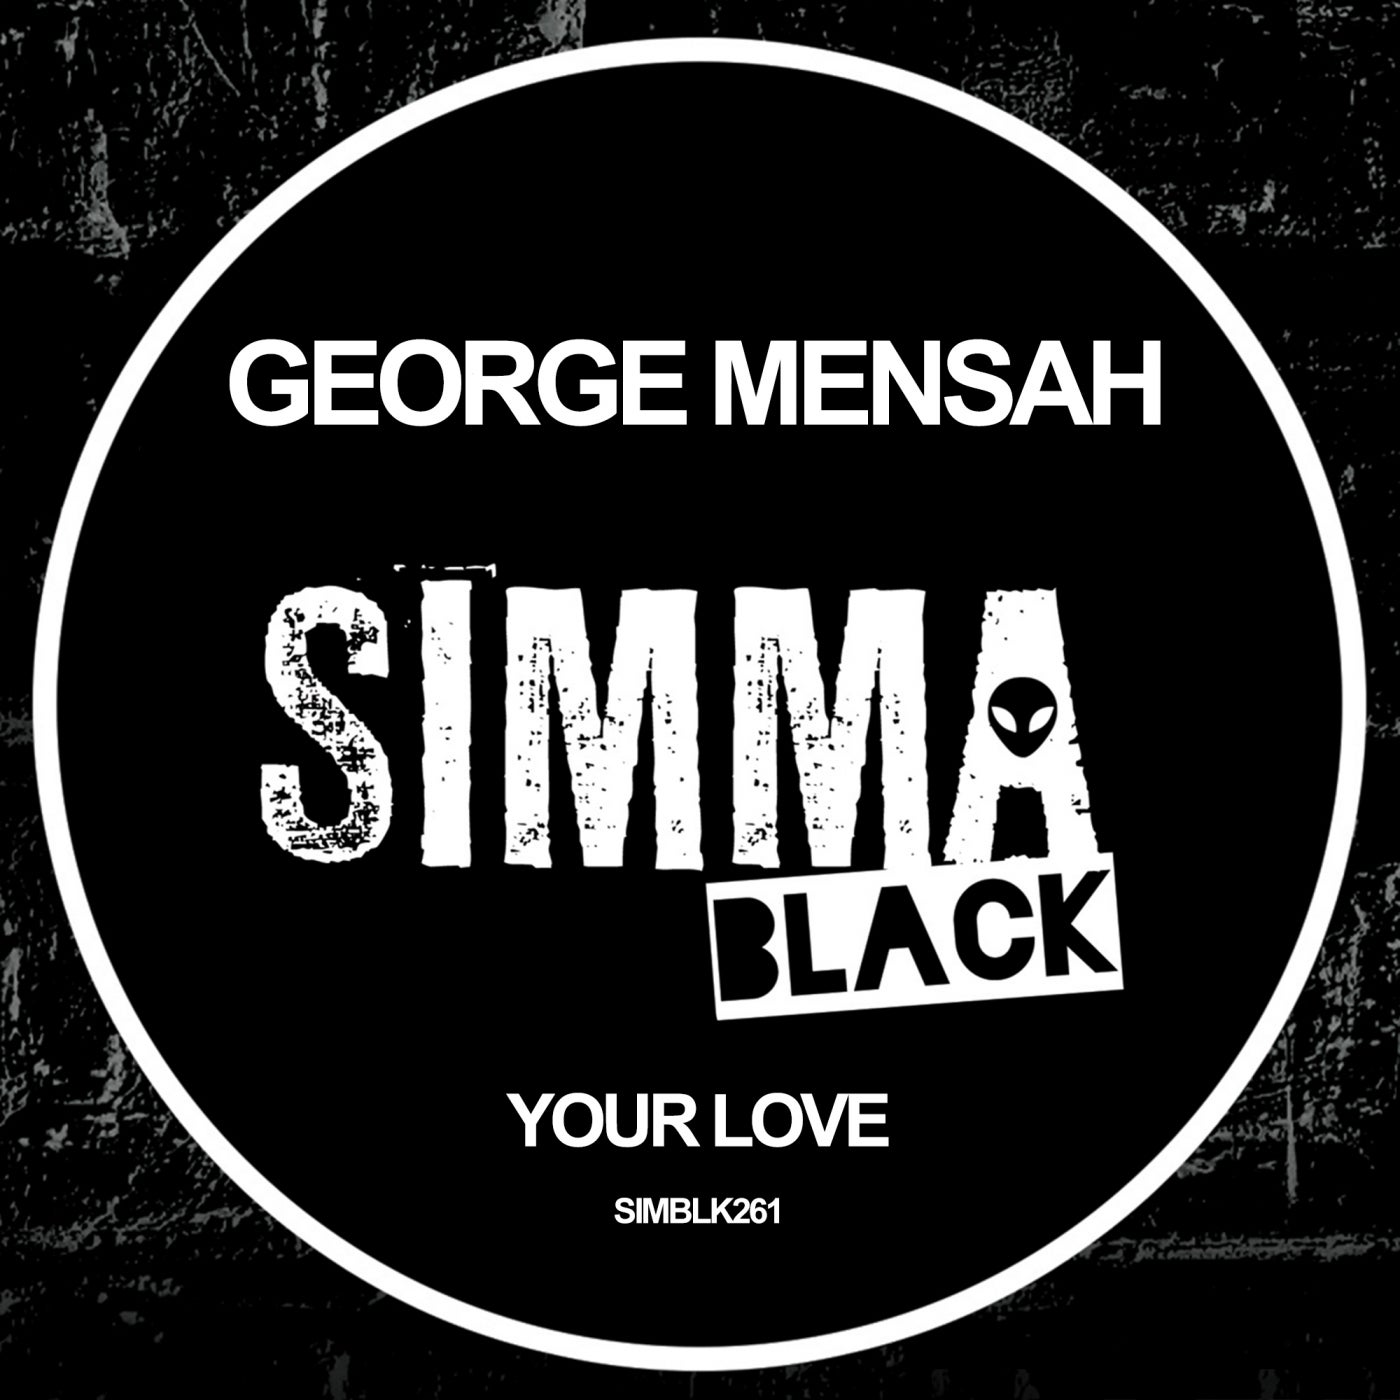 George Mensah – Your Love [SIMBLK261]